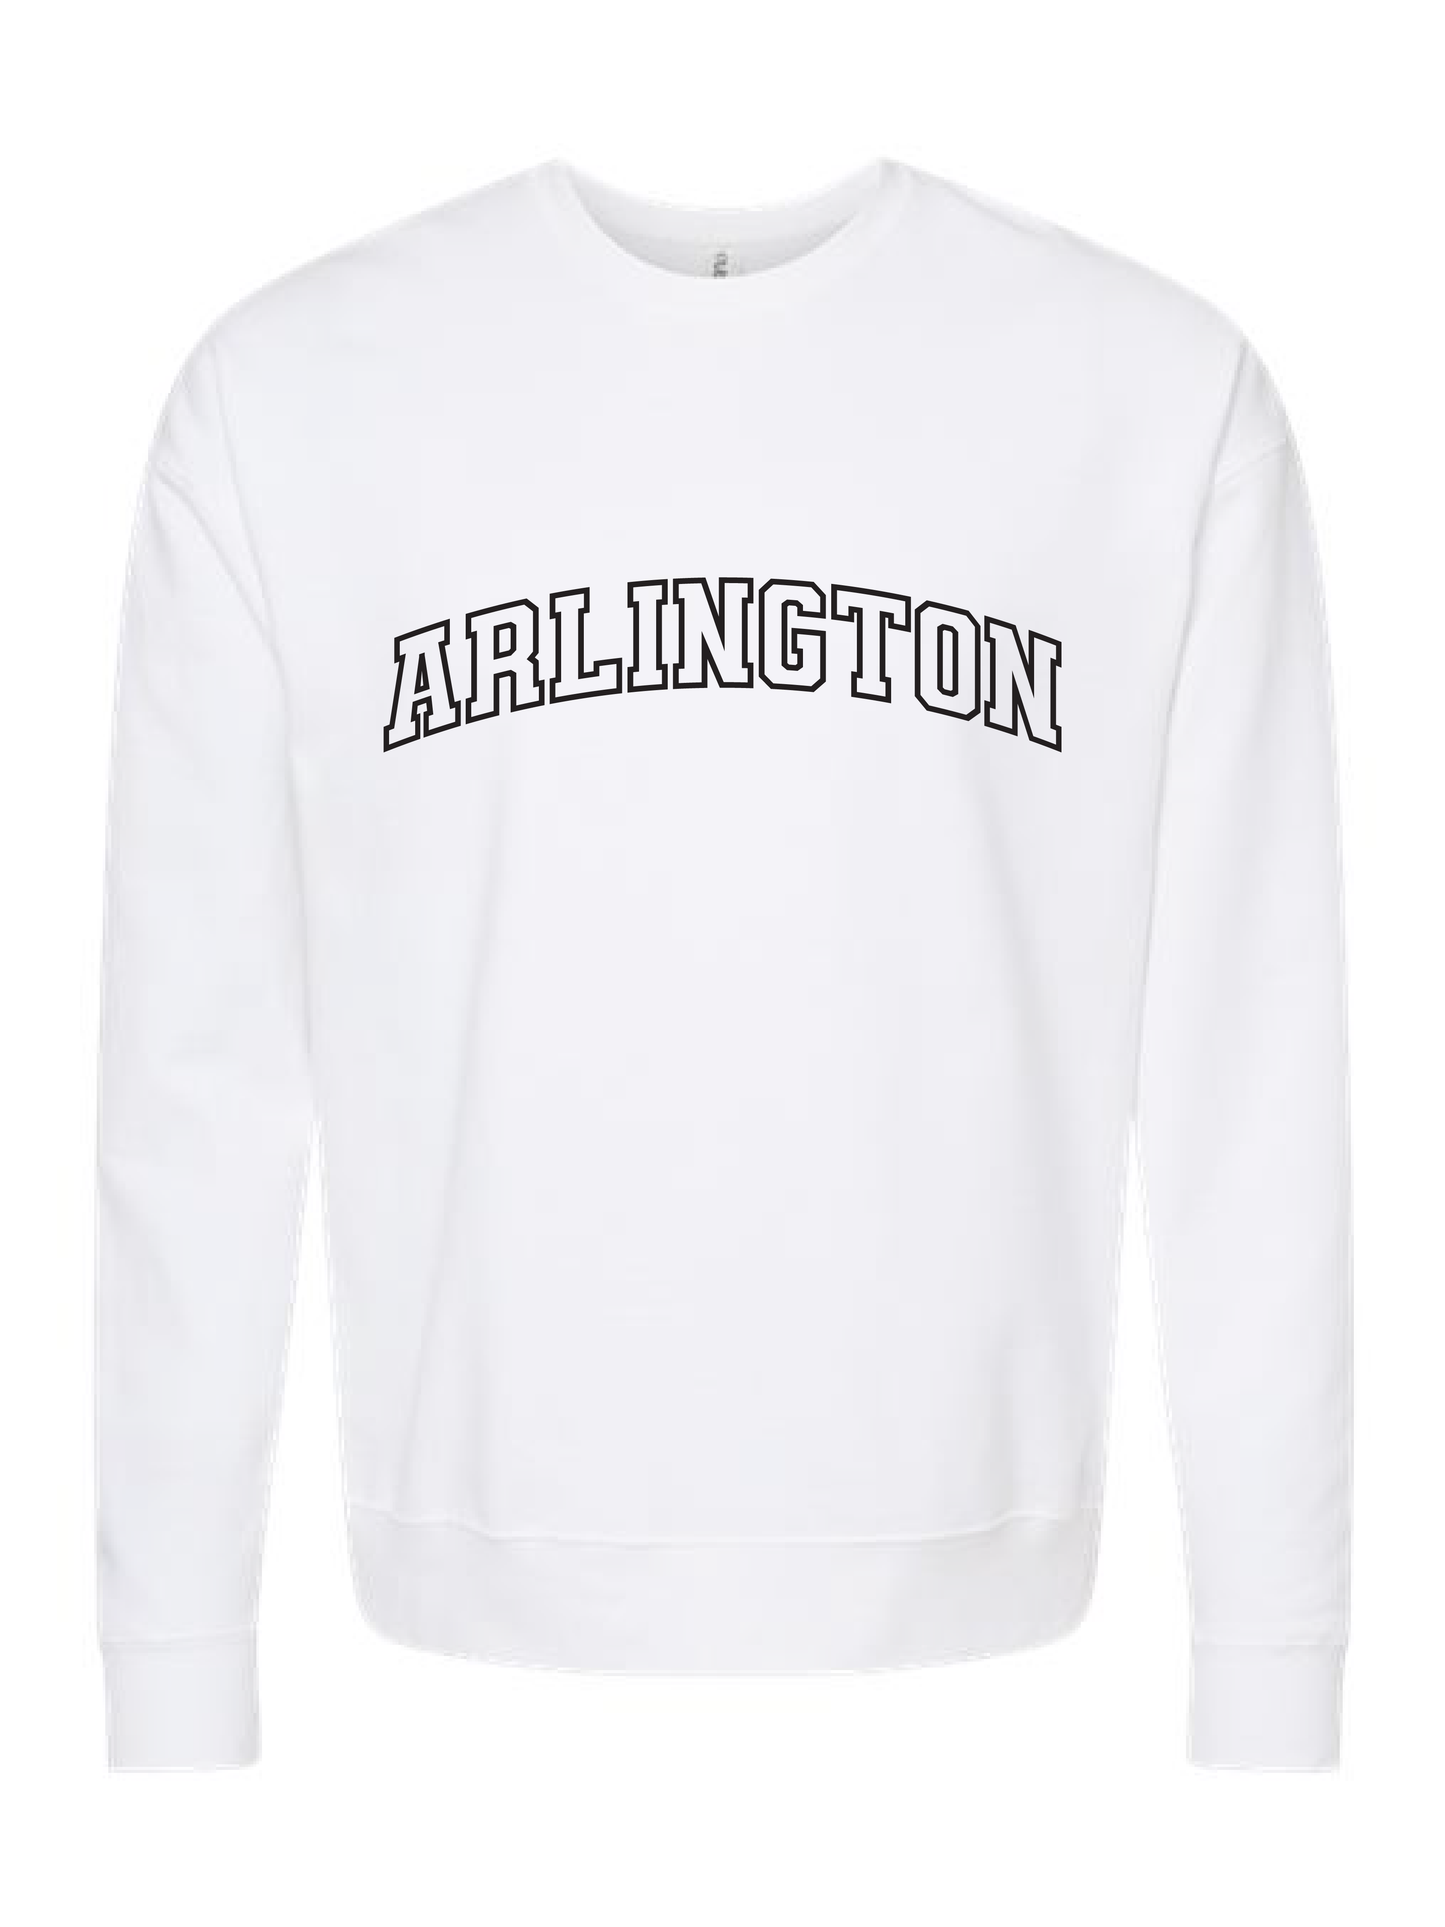 Arlington, TX Block Letter Crewneck Sweater